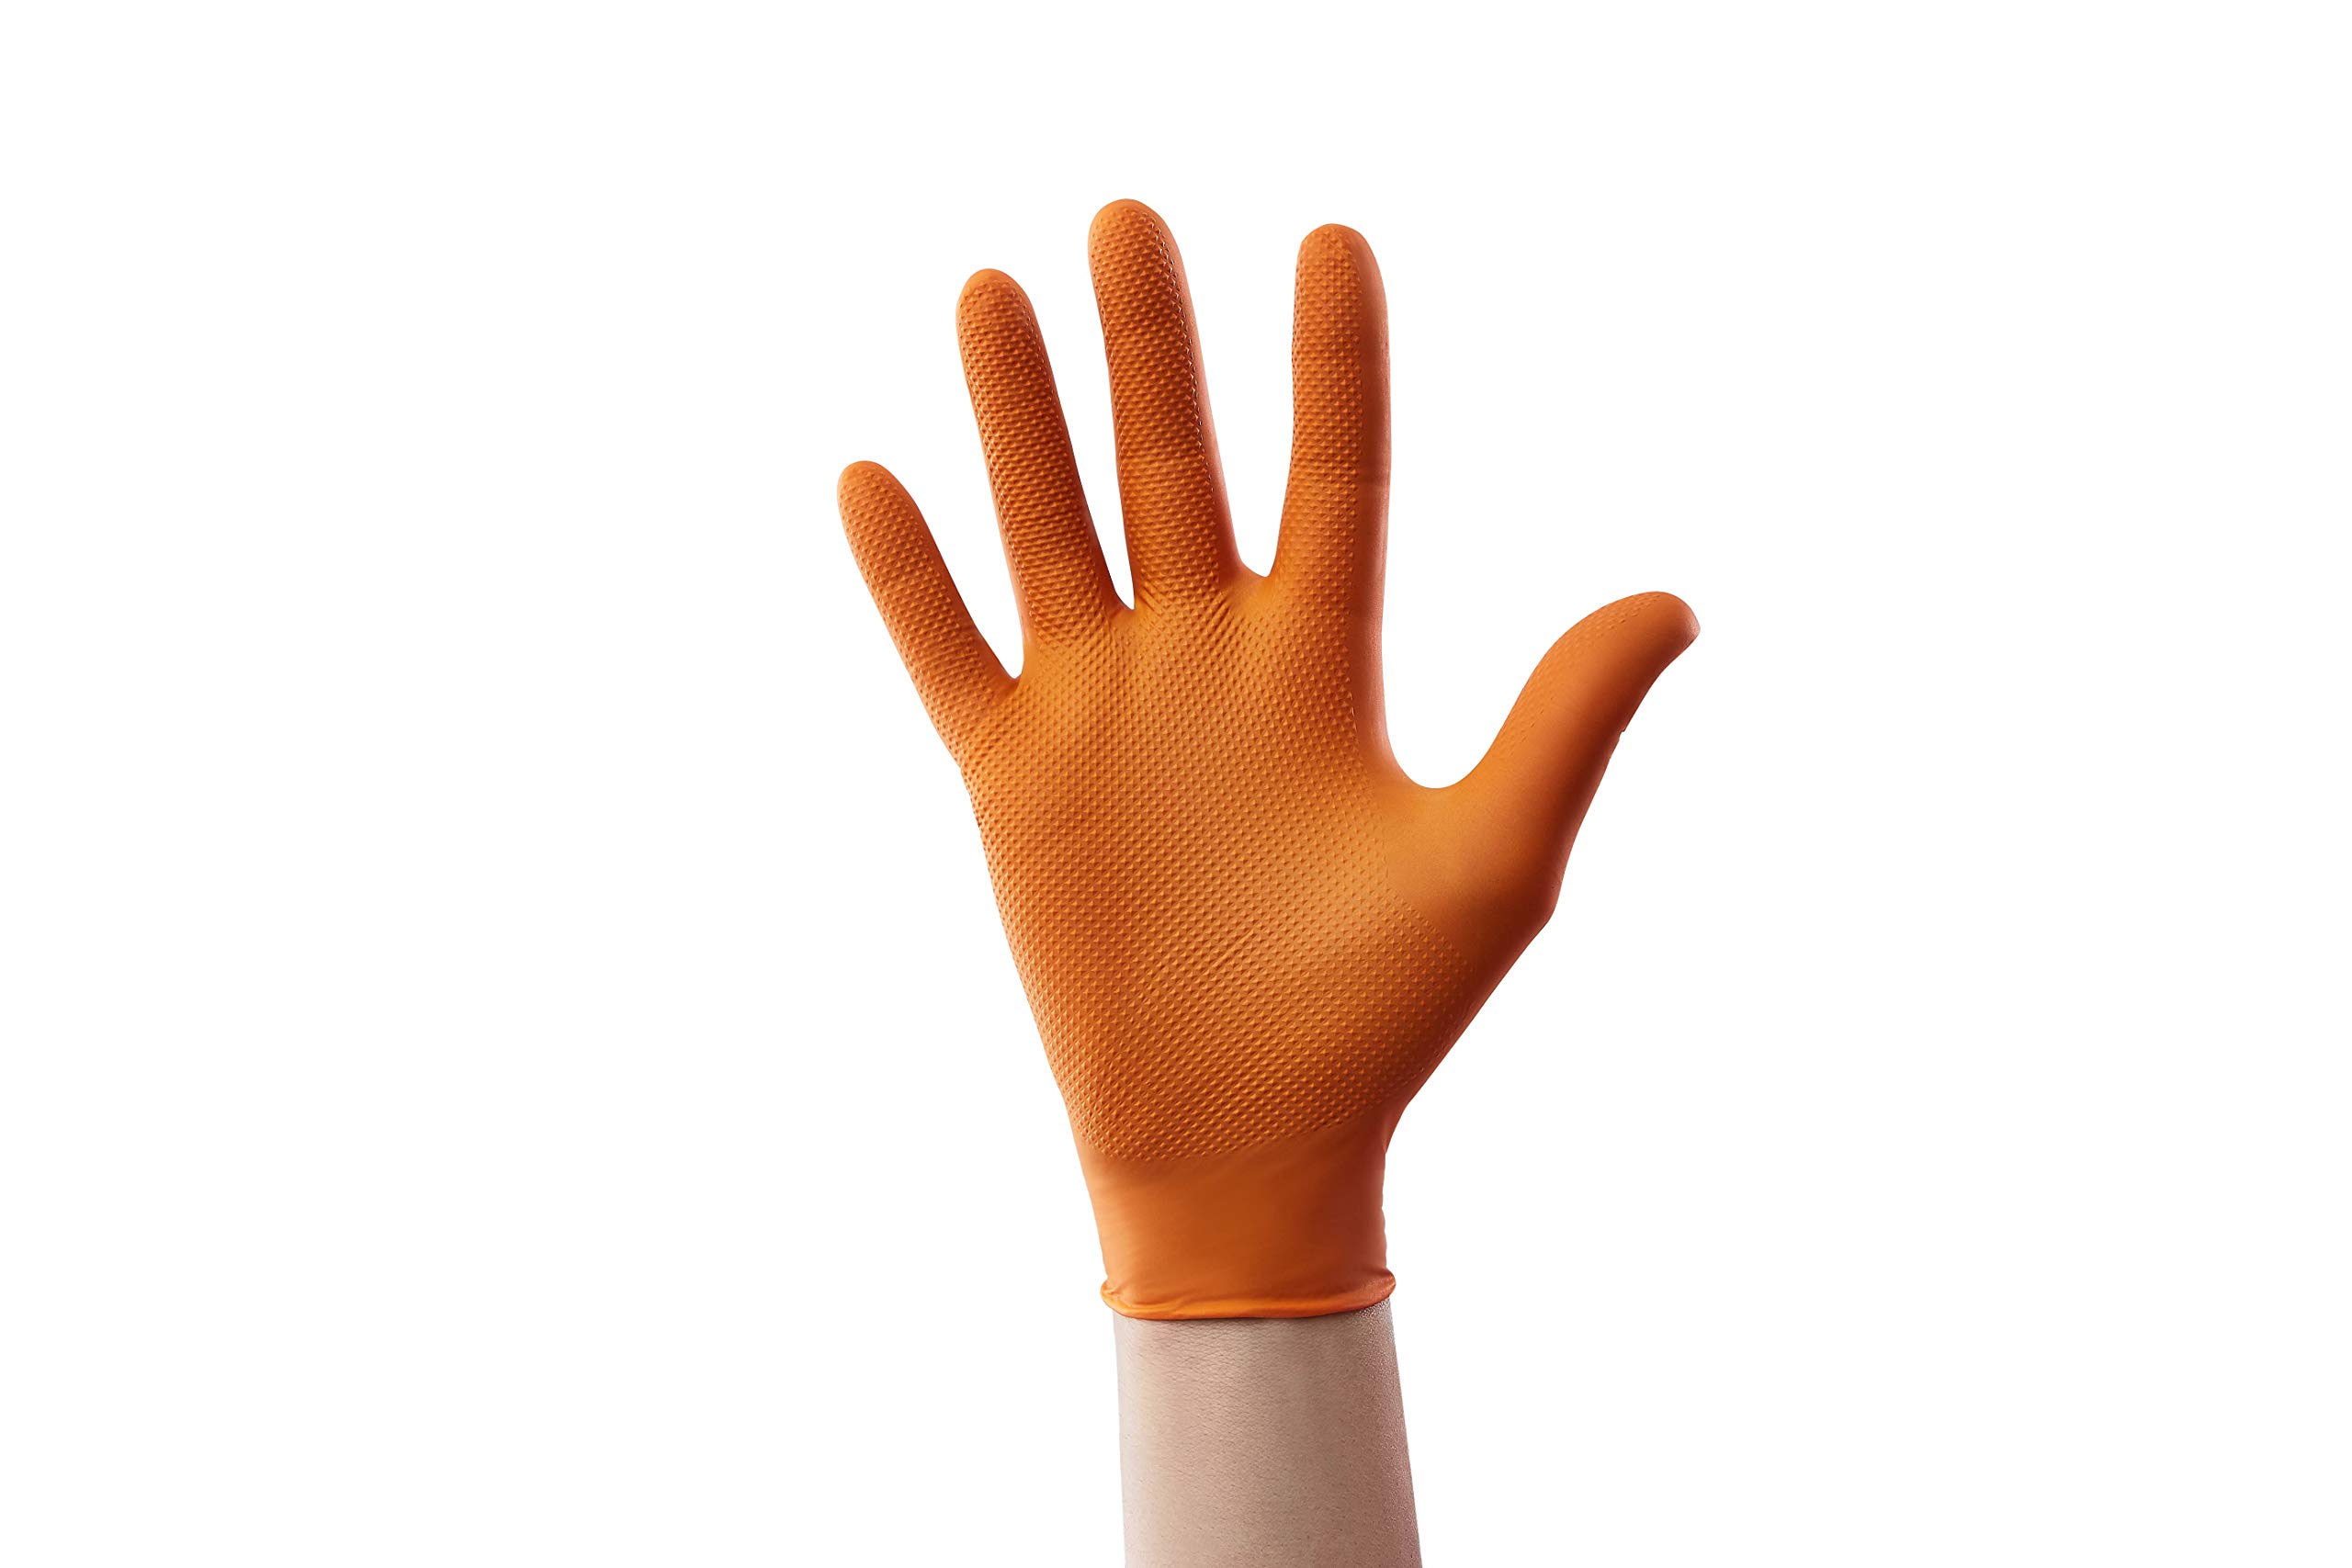 Venom Steel Maximum Grip Nitrile Gloves, 8 Mil Thick, Raised Diamond Texture For Grip, Puncture and Rip Resistant, Hi-Visibility Orange, Large (100 Count)